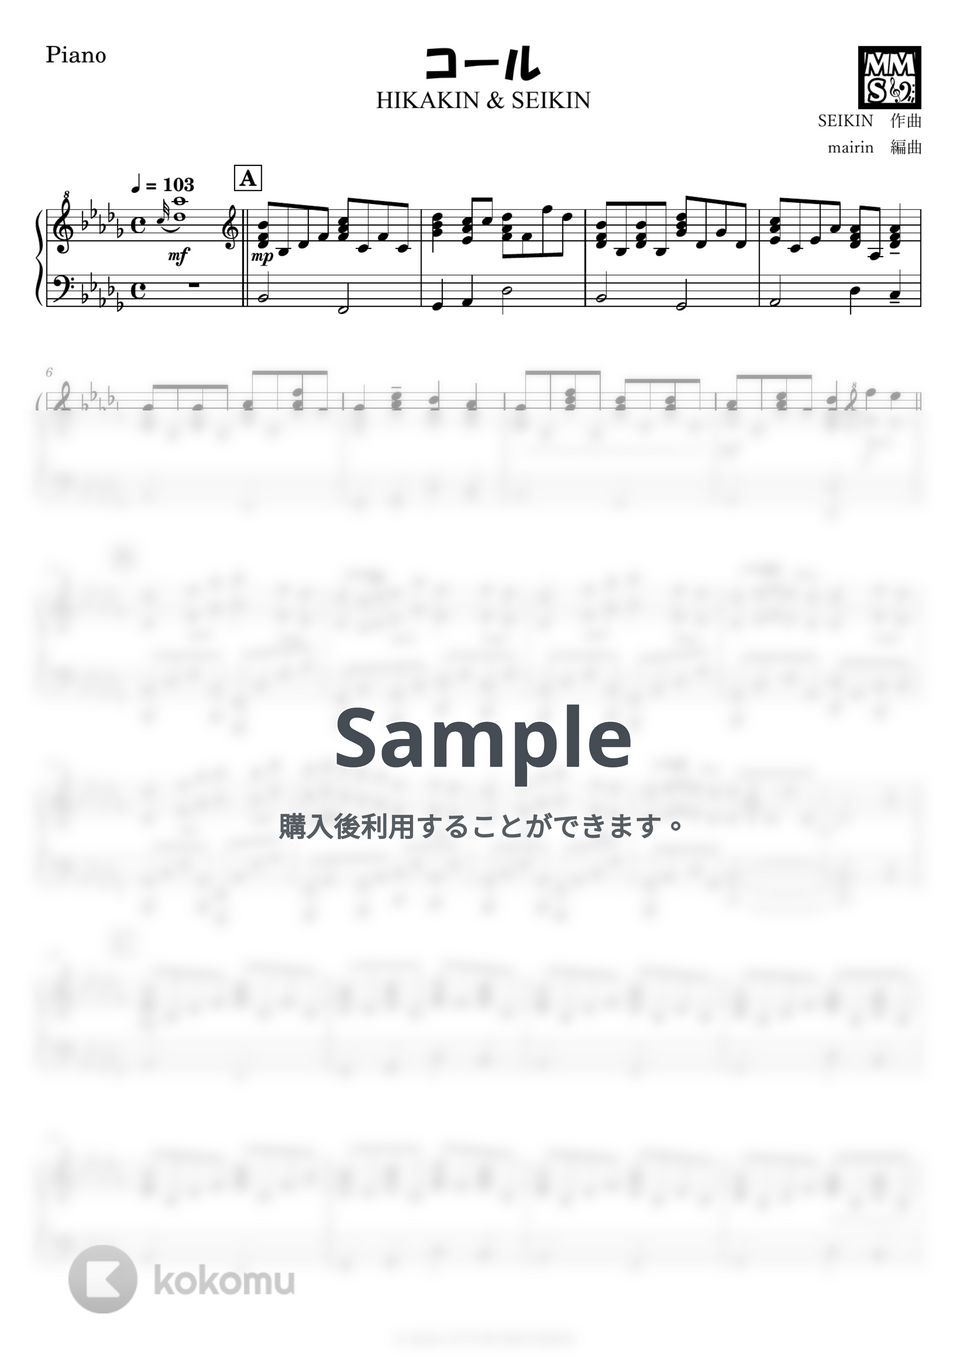 HIKAKIN & SEIKIN - コール (ピアノ伴奏 中級) by mairin